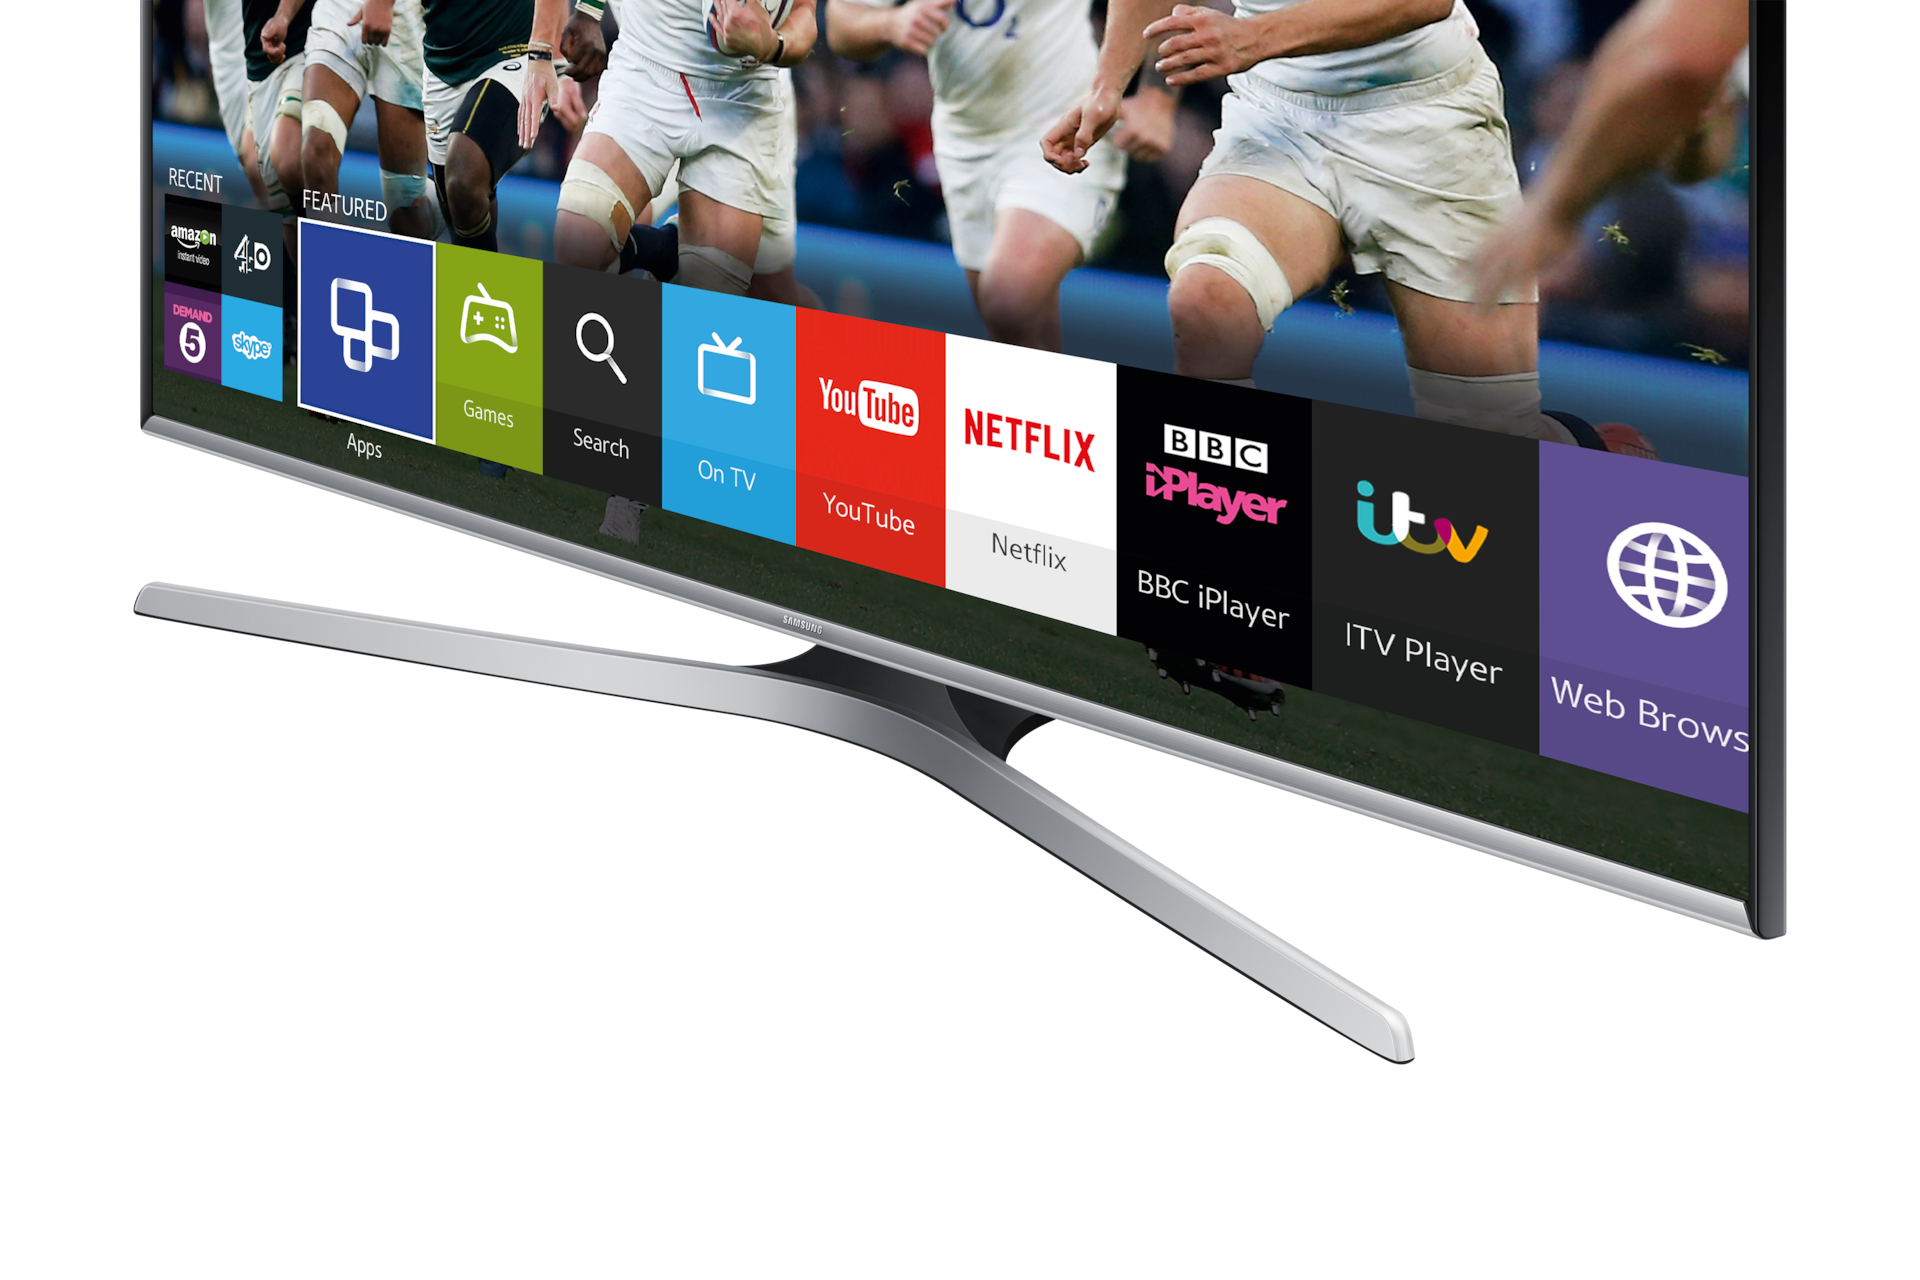 Samsung 48-inch J5500 Series 5 Full HD Smart 3D LED TV | Samsung UK3000 x 2000